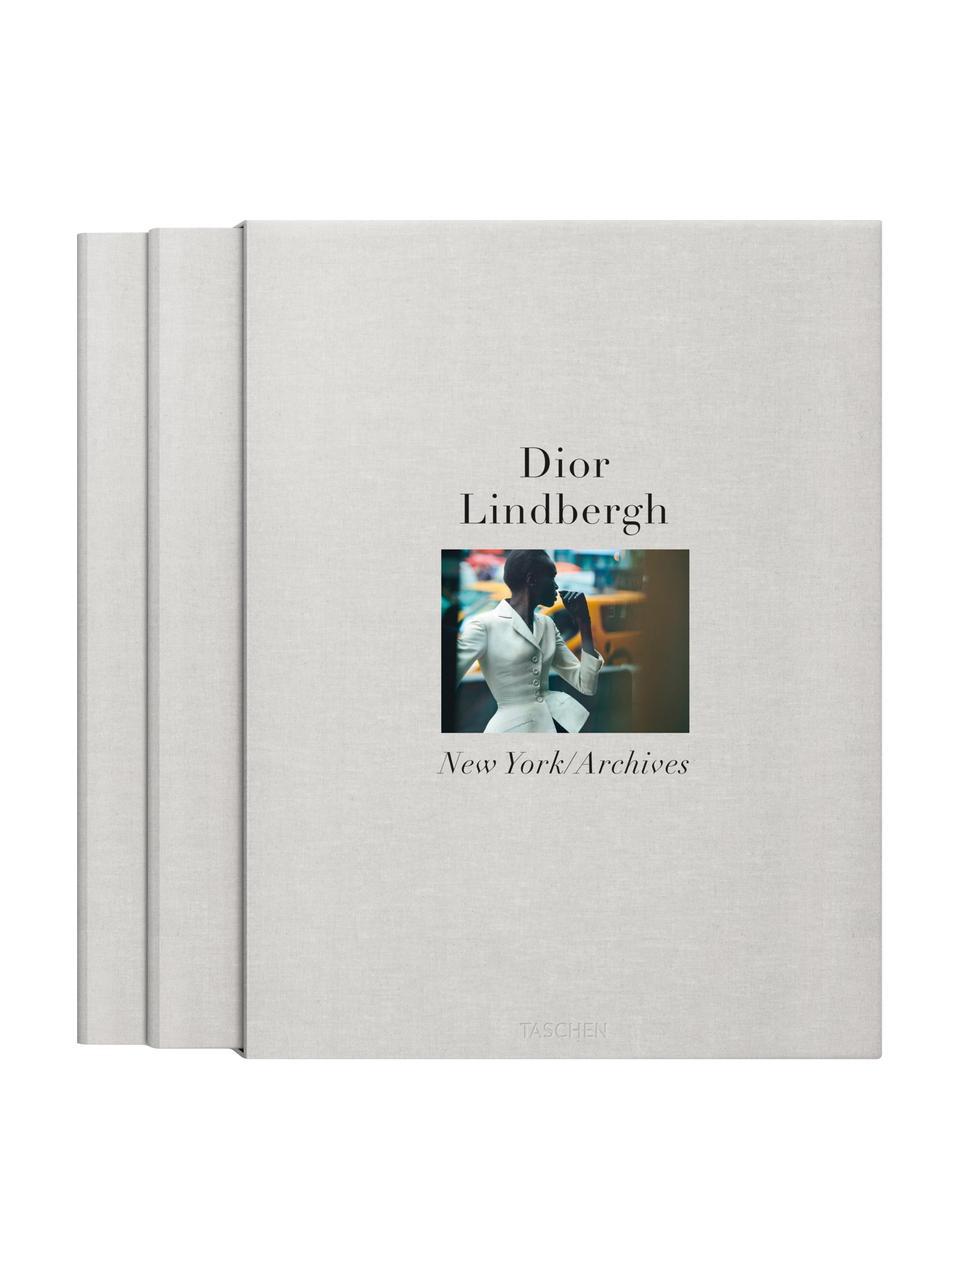 Bildbände Peter Lindbergh. Dior, im Schuber, Papier, Hardcover, Grau, Mehrfarbig, 28 x 37 cm